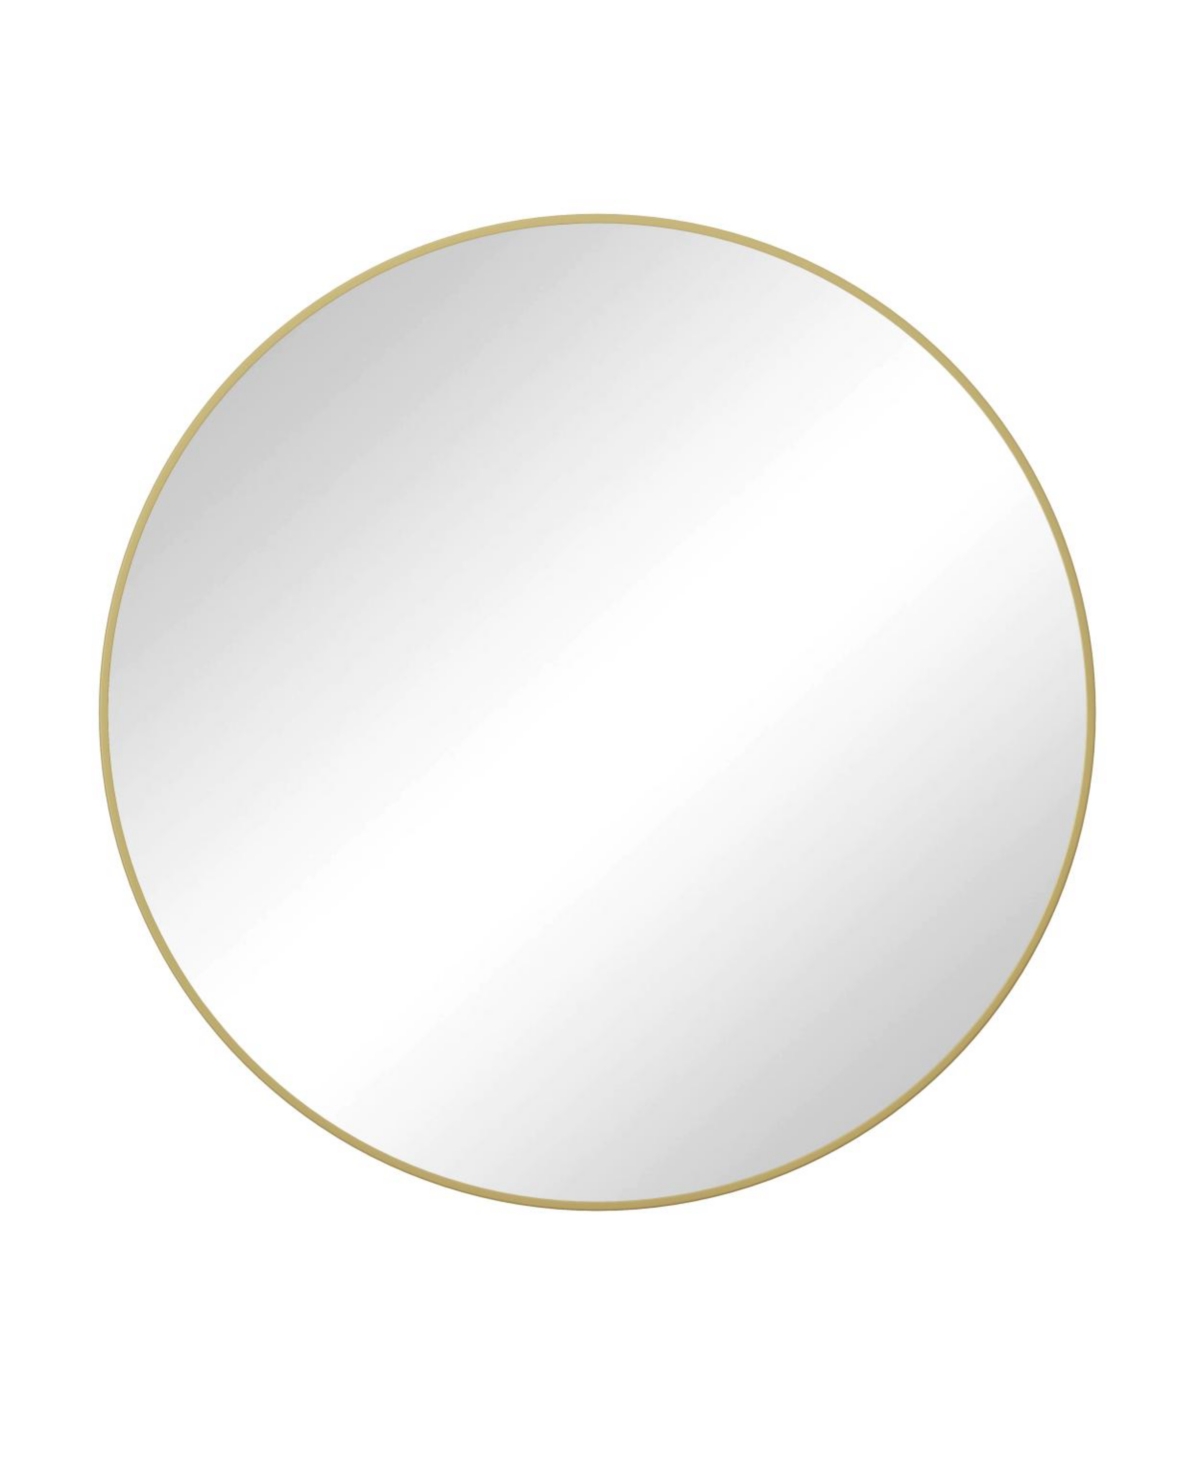 28" Wall Mounted Gold Circular Mirror, For Bathroom, Living Room, Bedroom Wall Decor - Gold